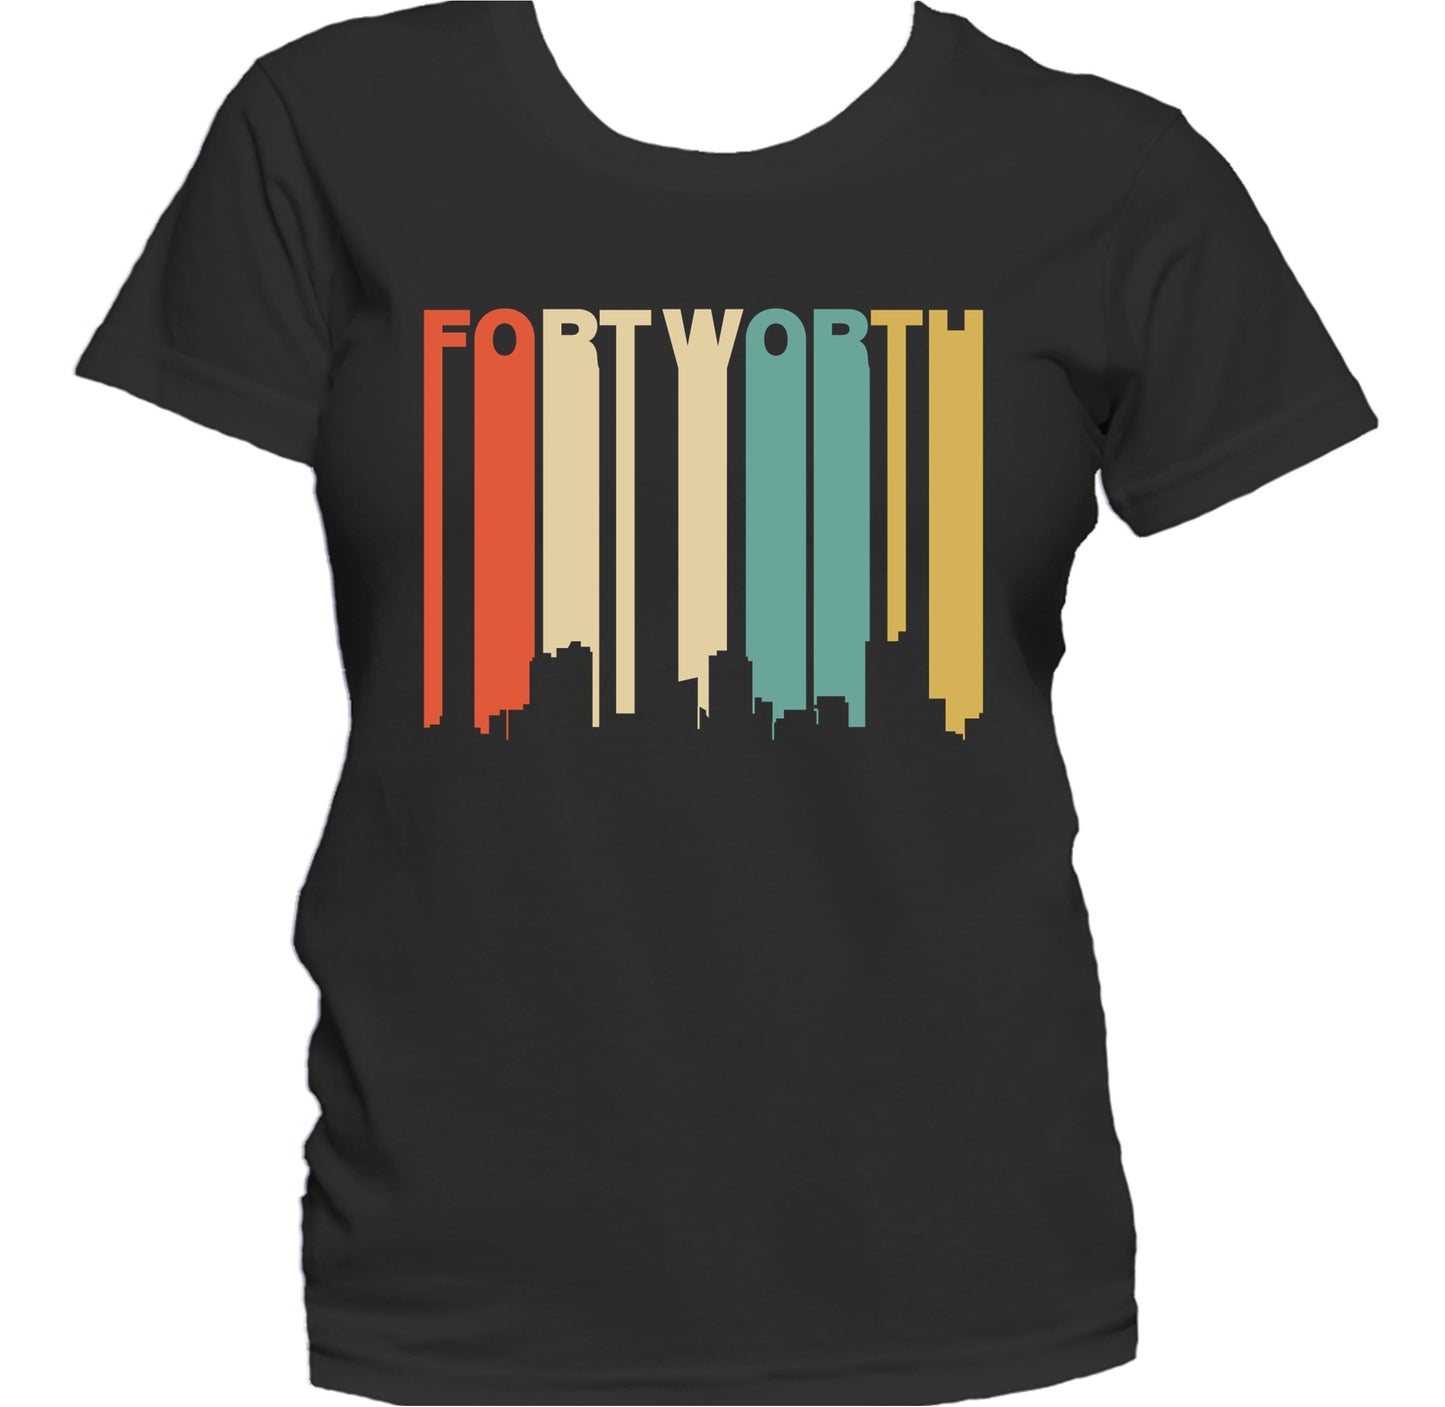 Retro 1970's Style Fort Worth Texas Skyline Women's T-Shirt